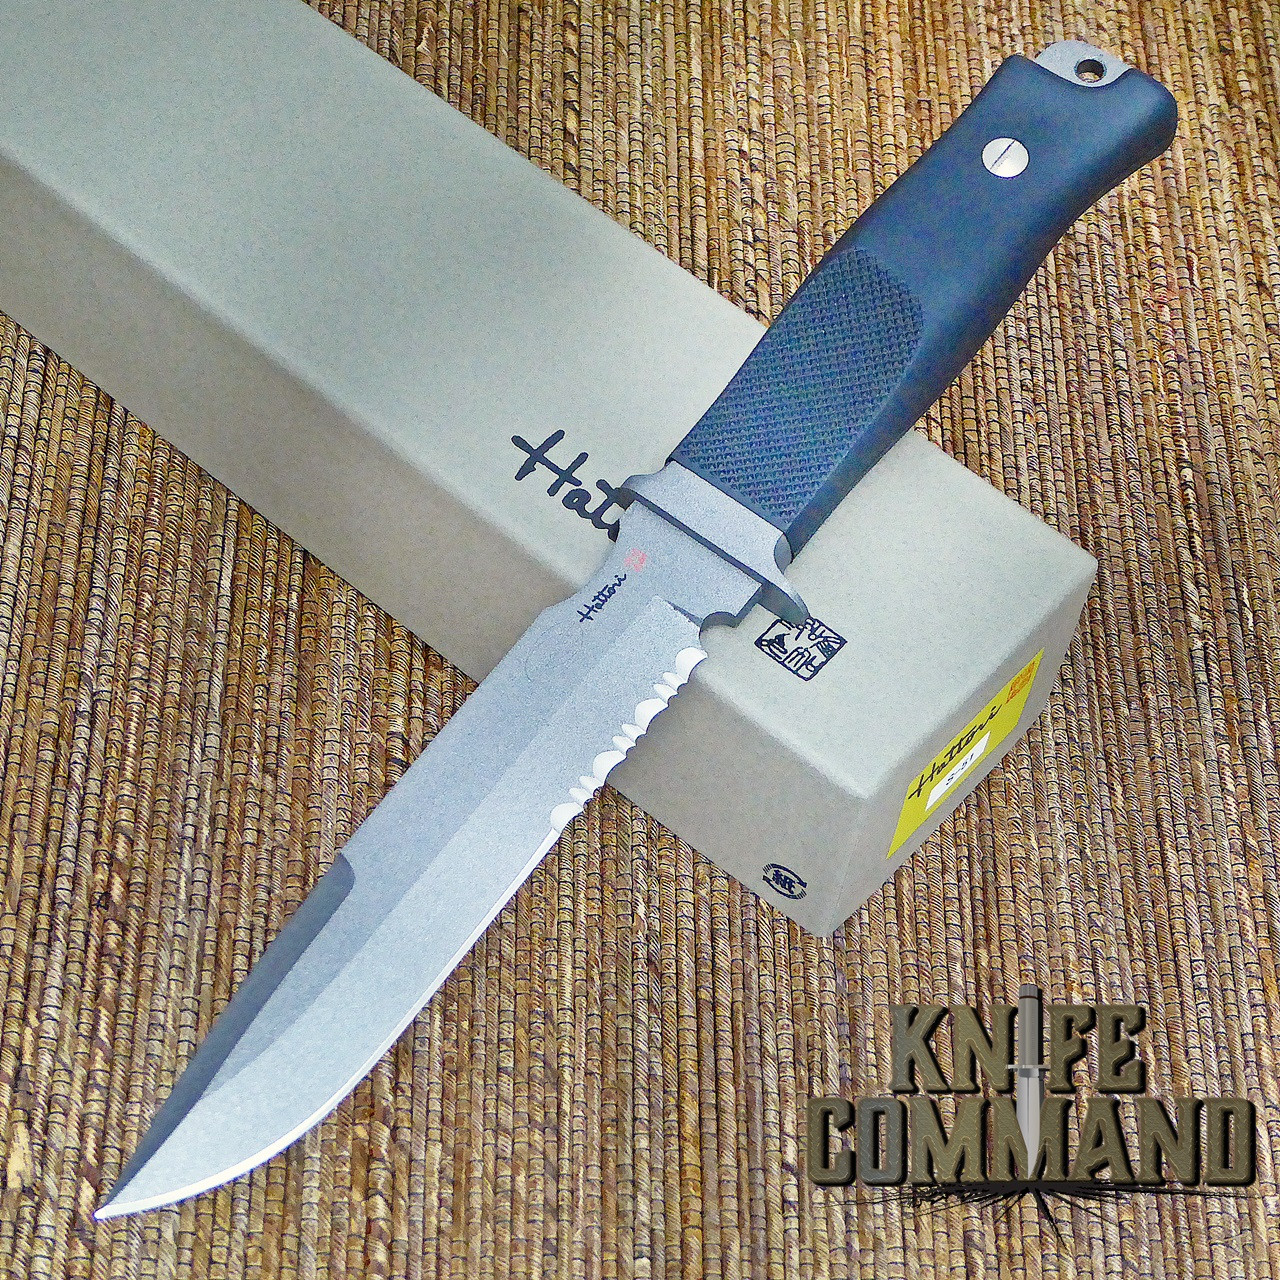 Hattori Knives Model S-51 Sea Commander Combat Military and Dive Knife.   Anti-glare flourine coated blade.